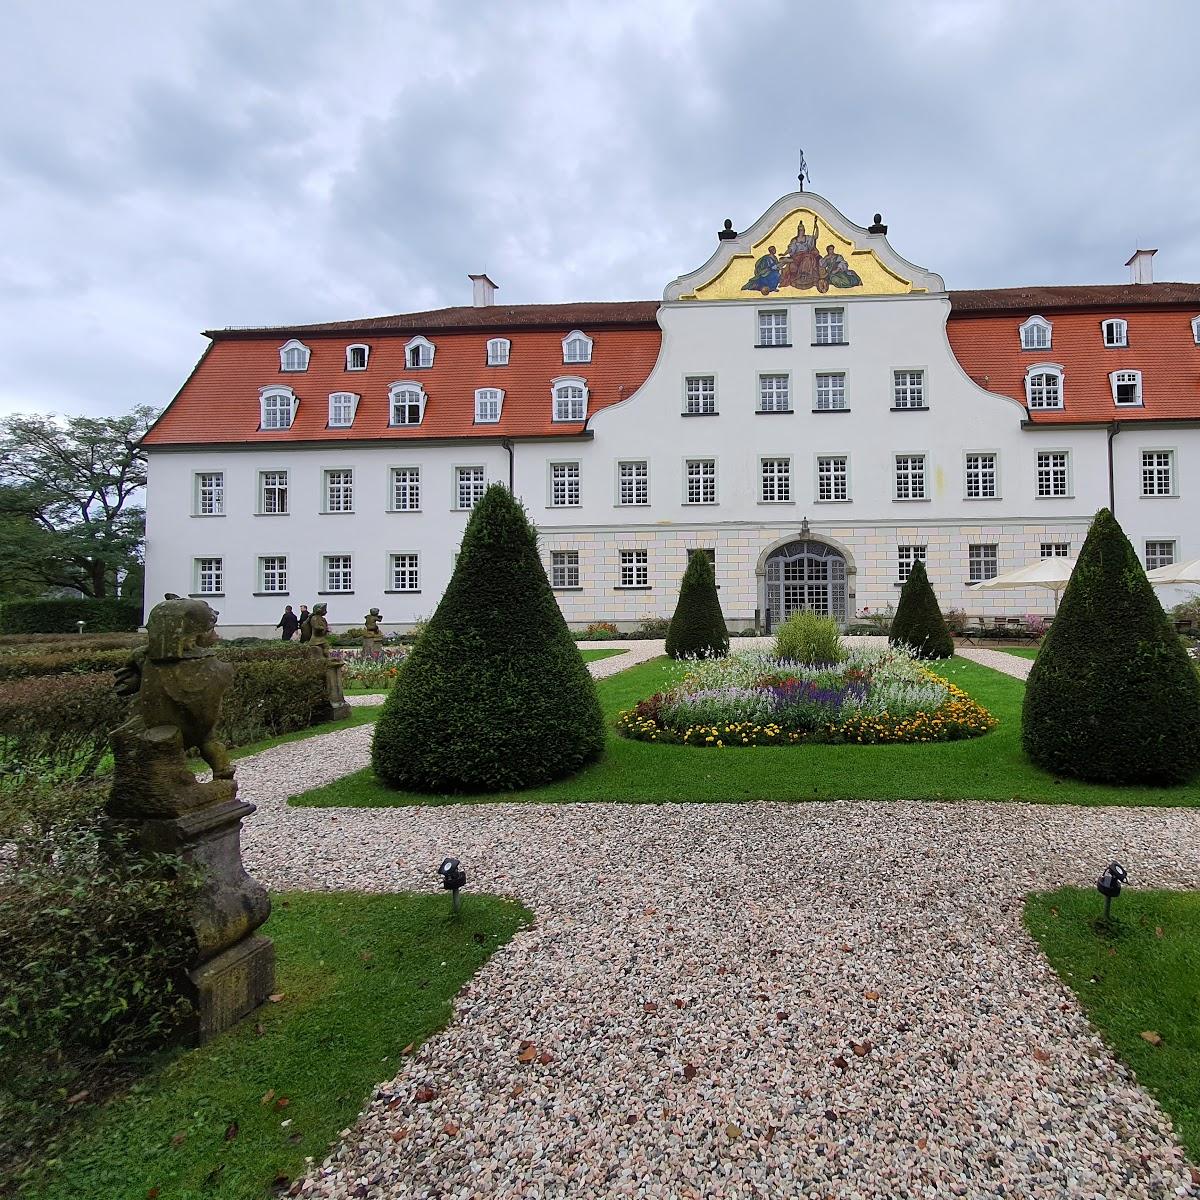 Restaurant "Schloss  | Hotel" in  Lautrach